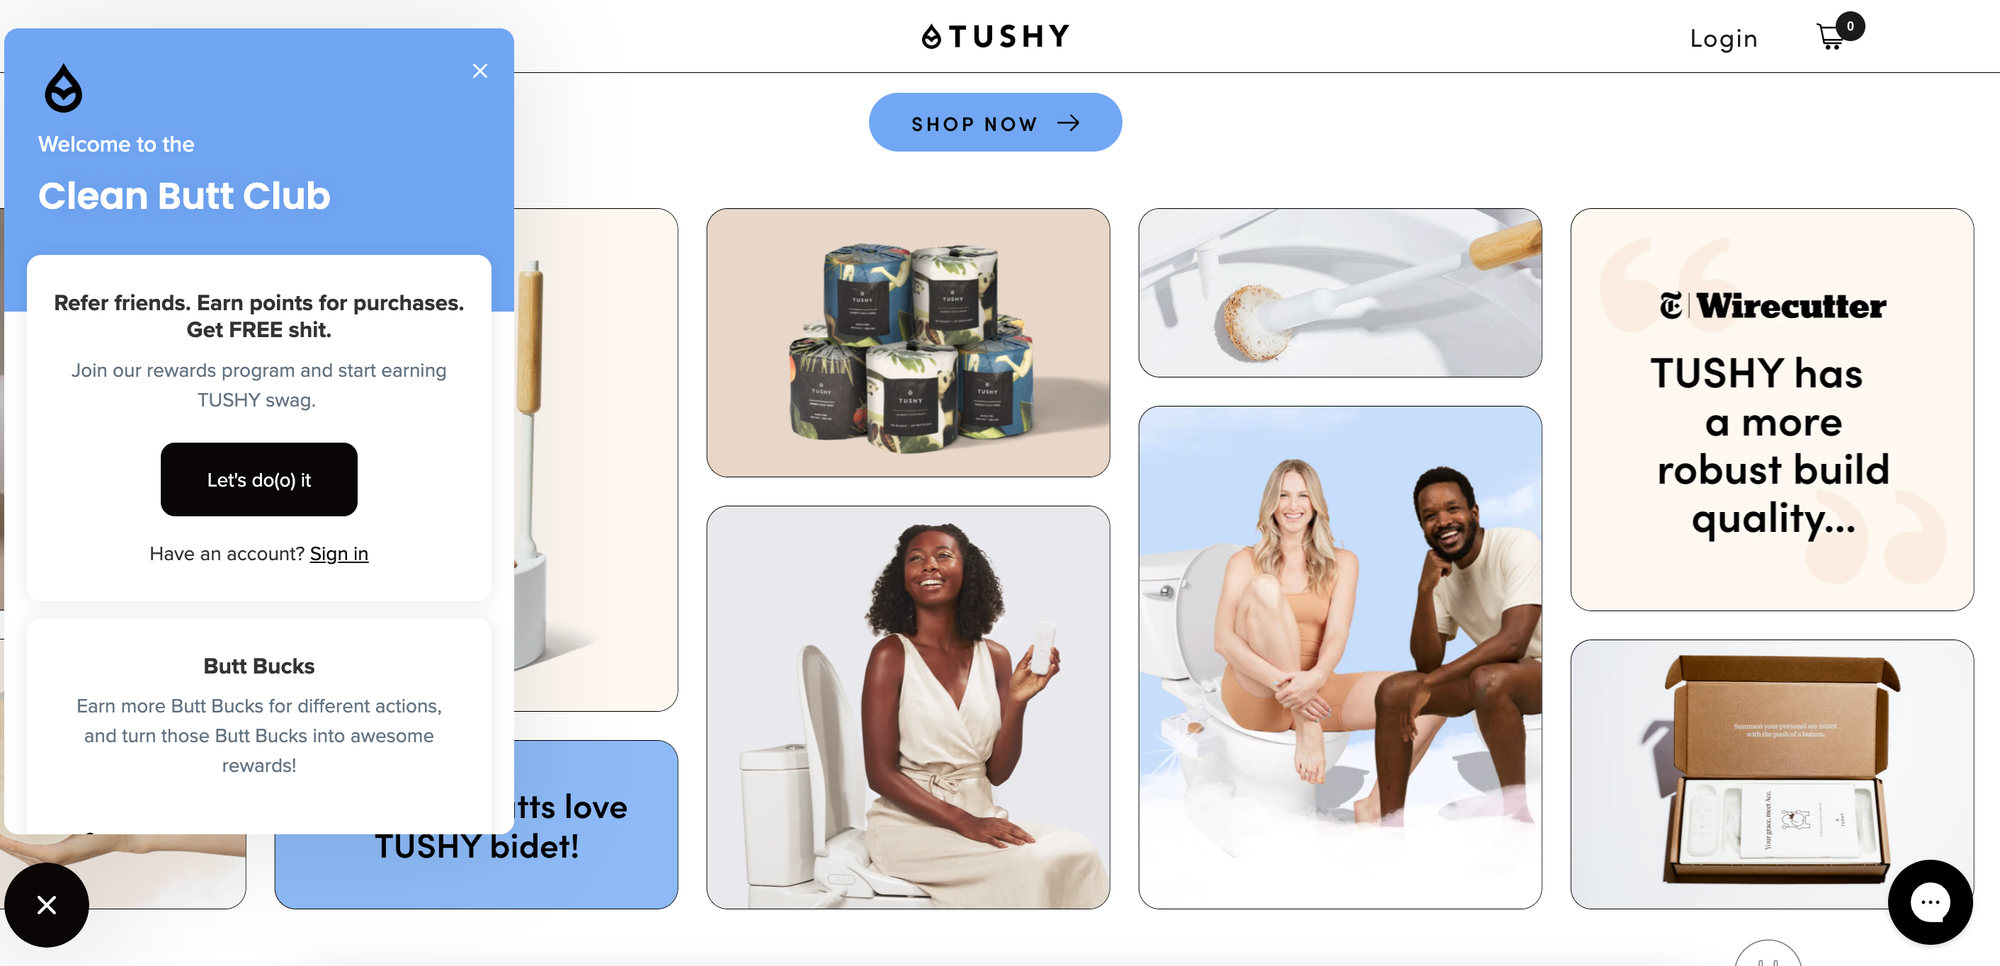 screenshot of ecommerce brand Tushy and its loyalty program launcher panel